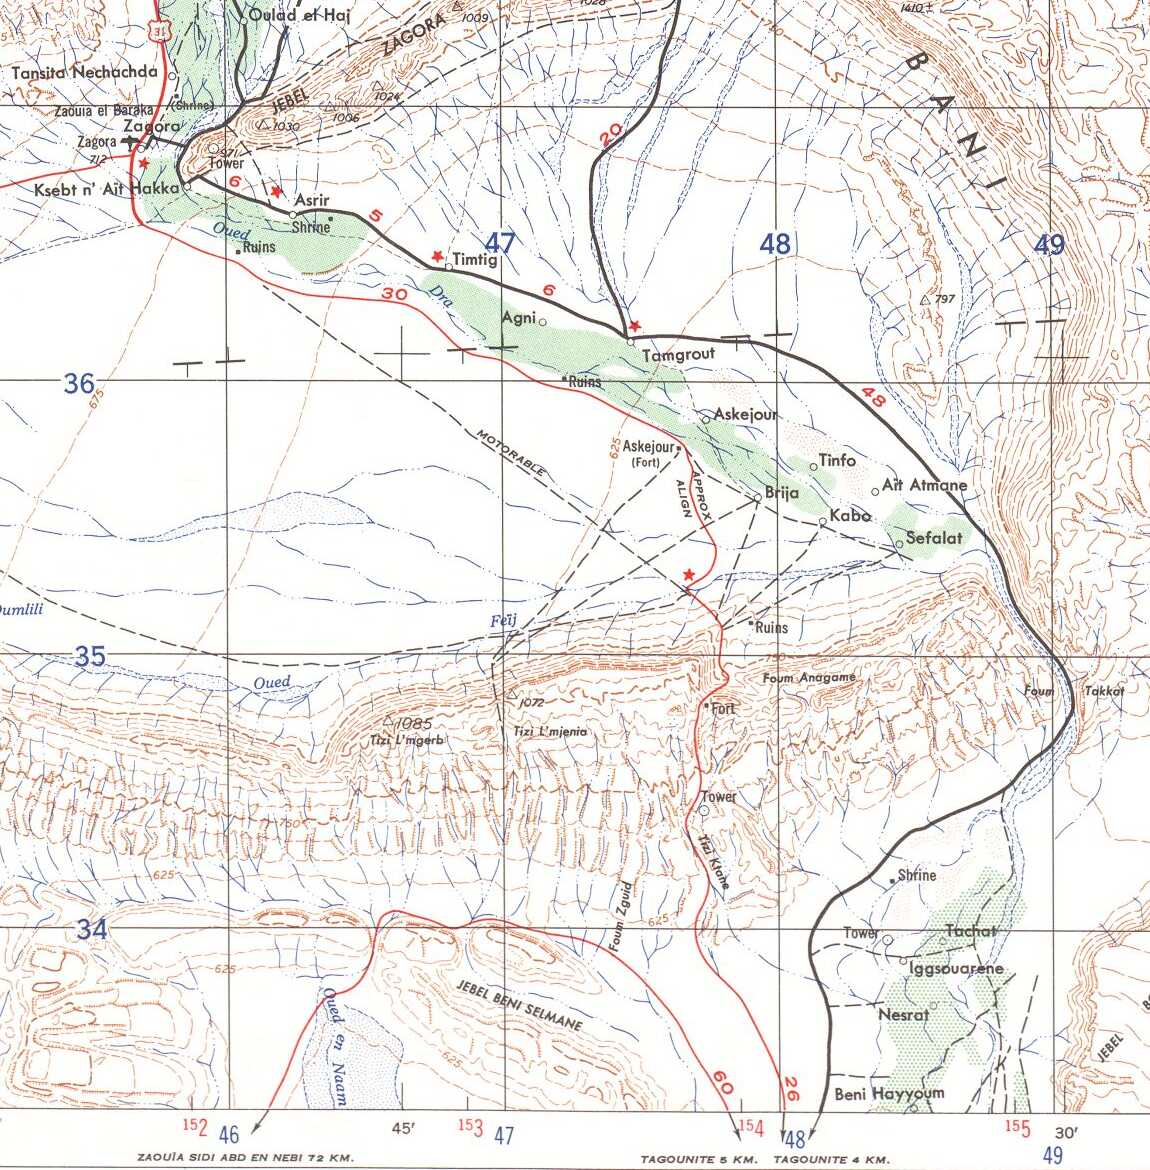 Portion of 1:250,000 map NH30-5 from https://lib.utexas.edu/maps/